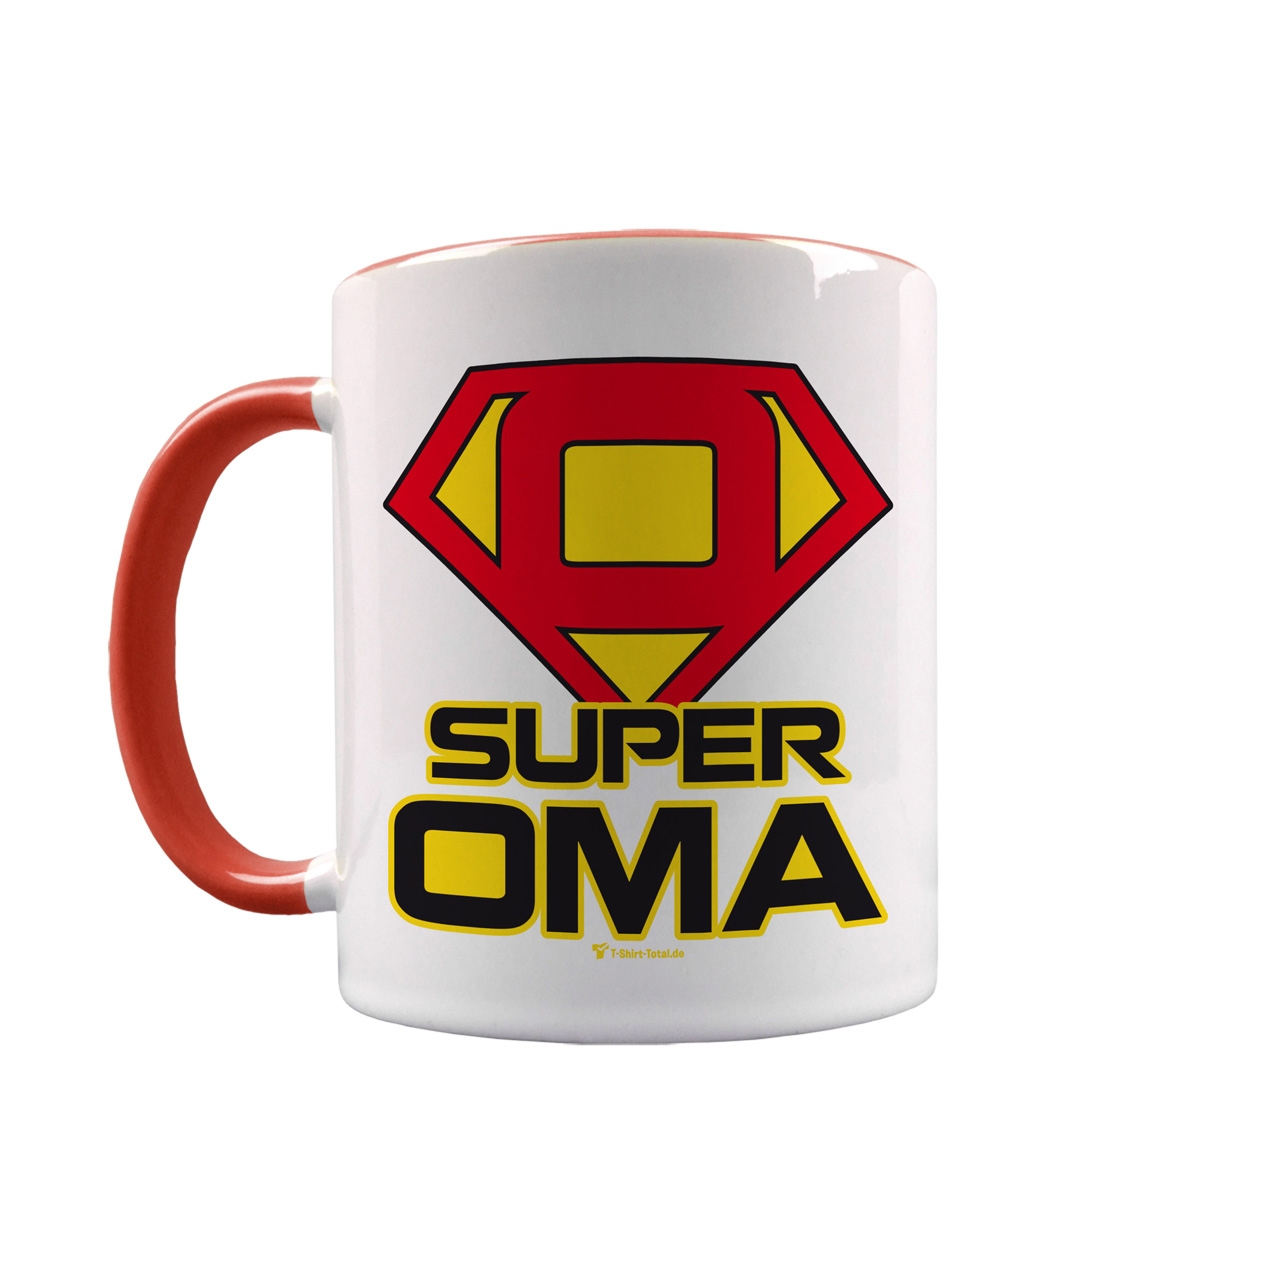 Super Oma Tasse rot / weiß